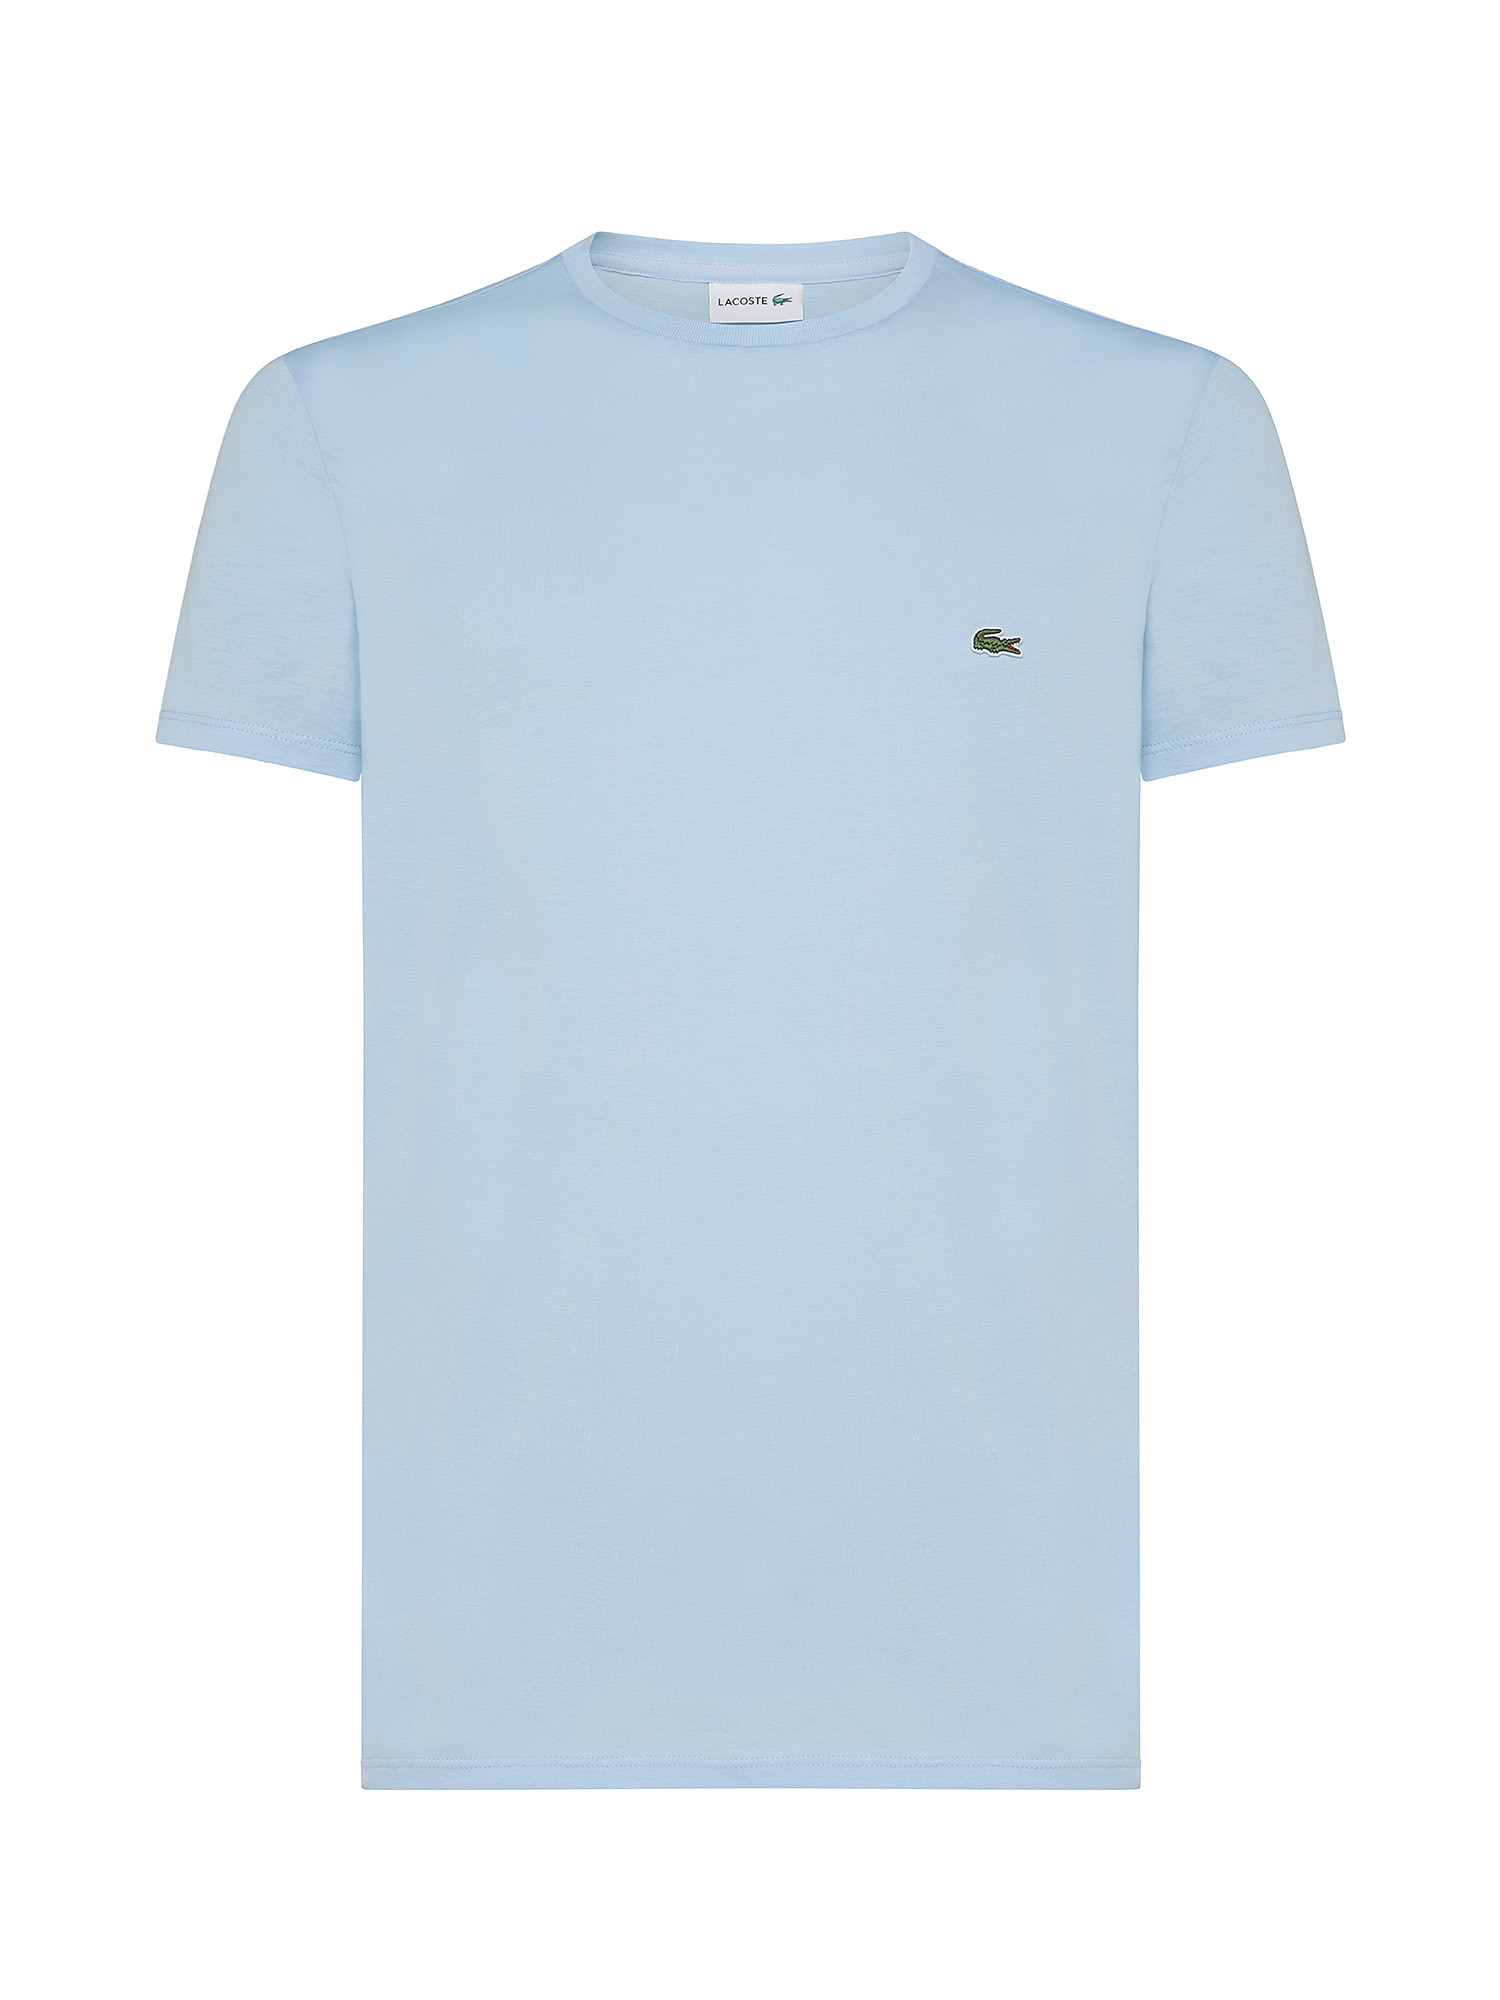 Lacoste - Pima cotton jersey crewneck T-shirt, Light Blue, large image number 0